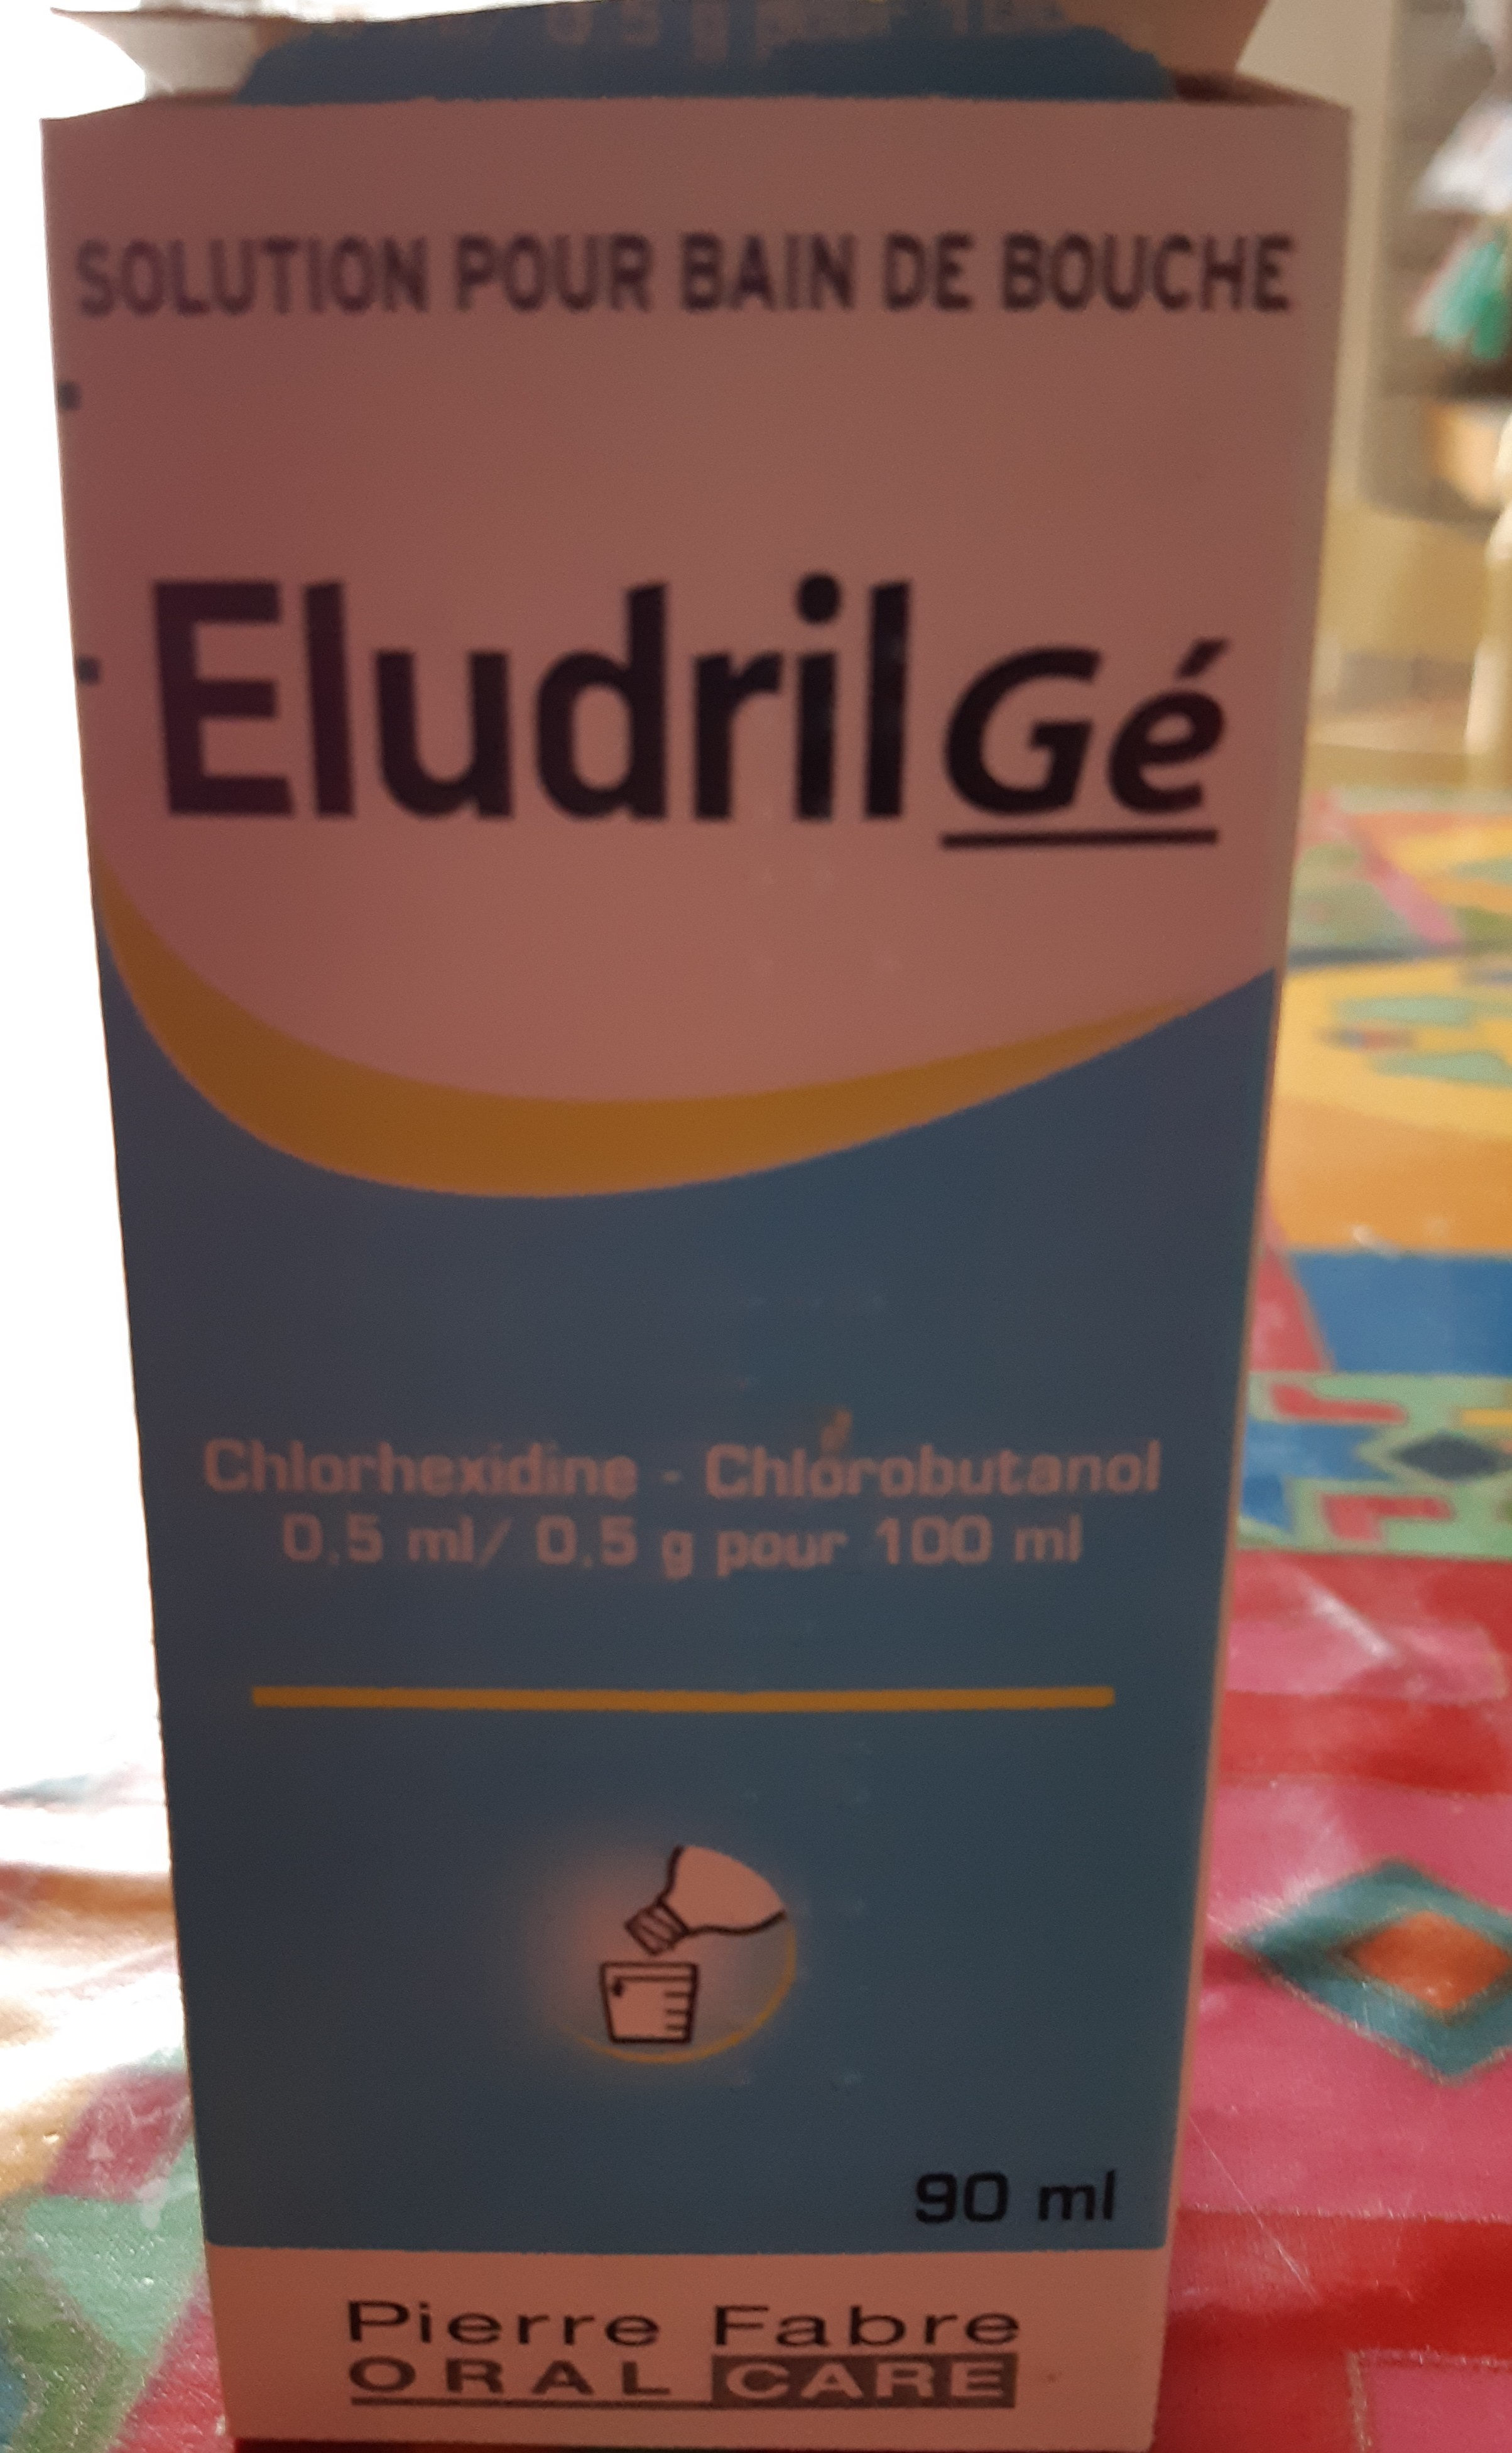 eludril gé - Product - fr